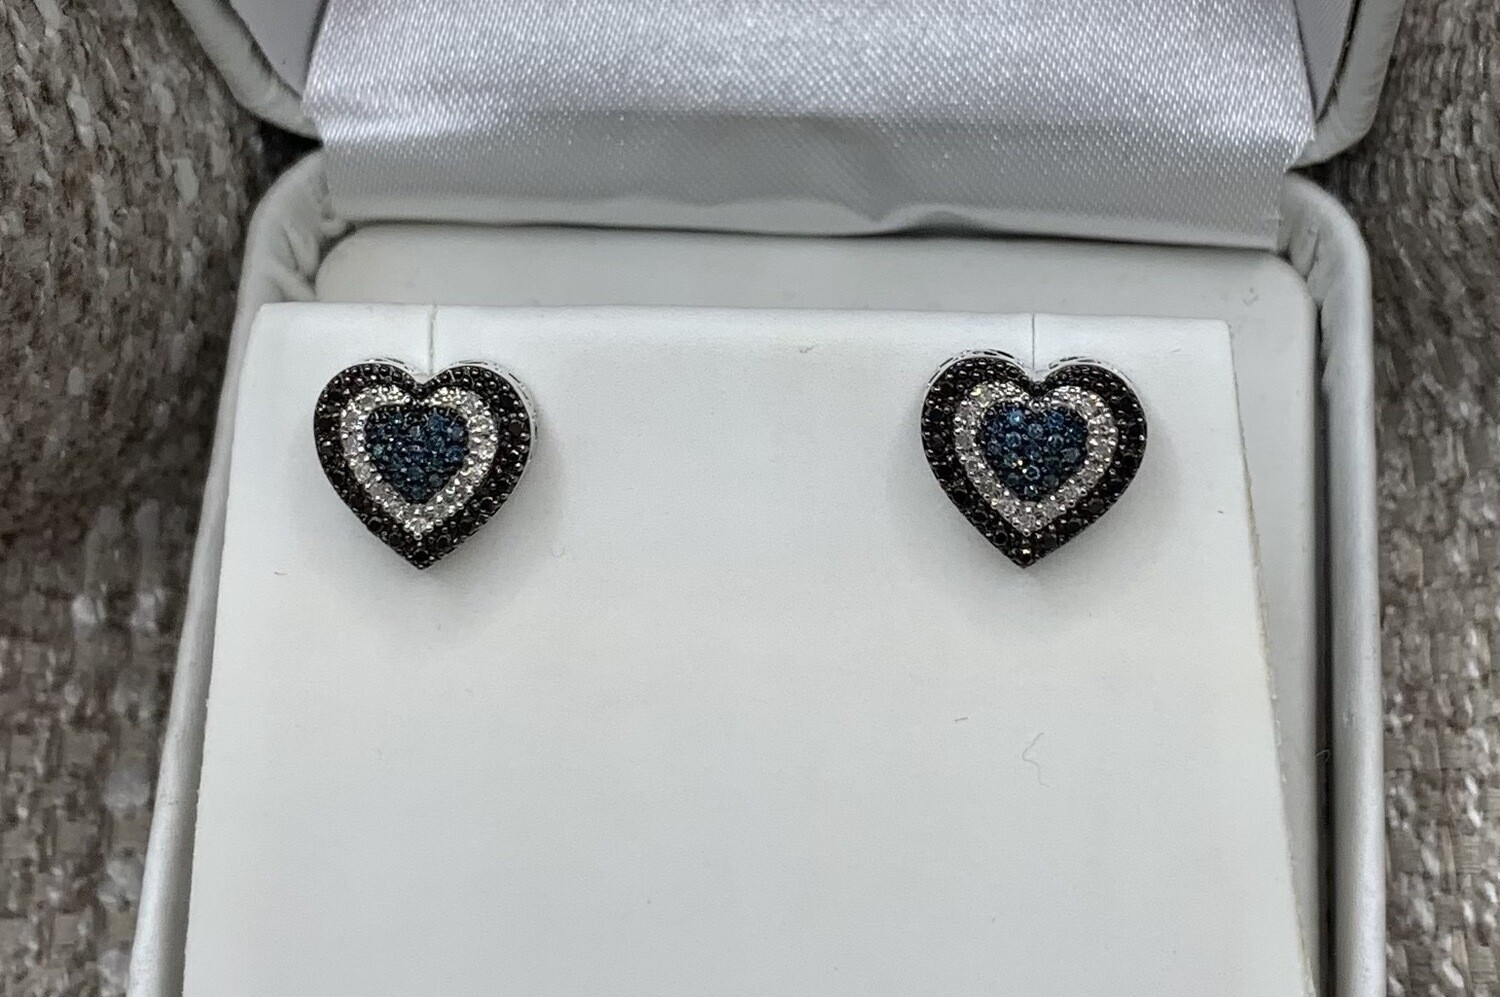 Blue ,Black and White Diamond Heart Earrings. 35 Pt Total Weight 10 Kt. White Gold Setting